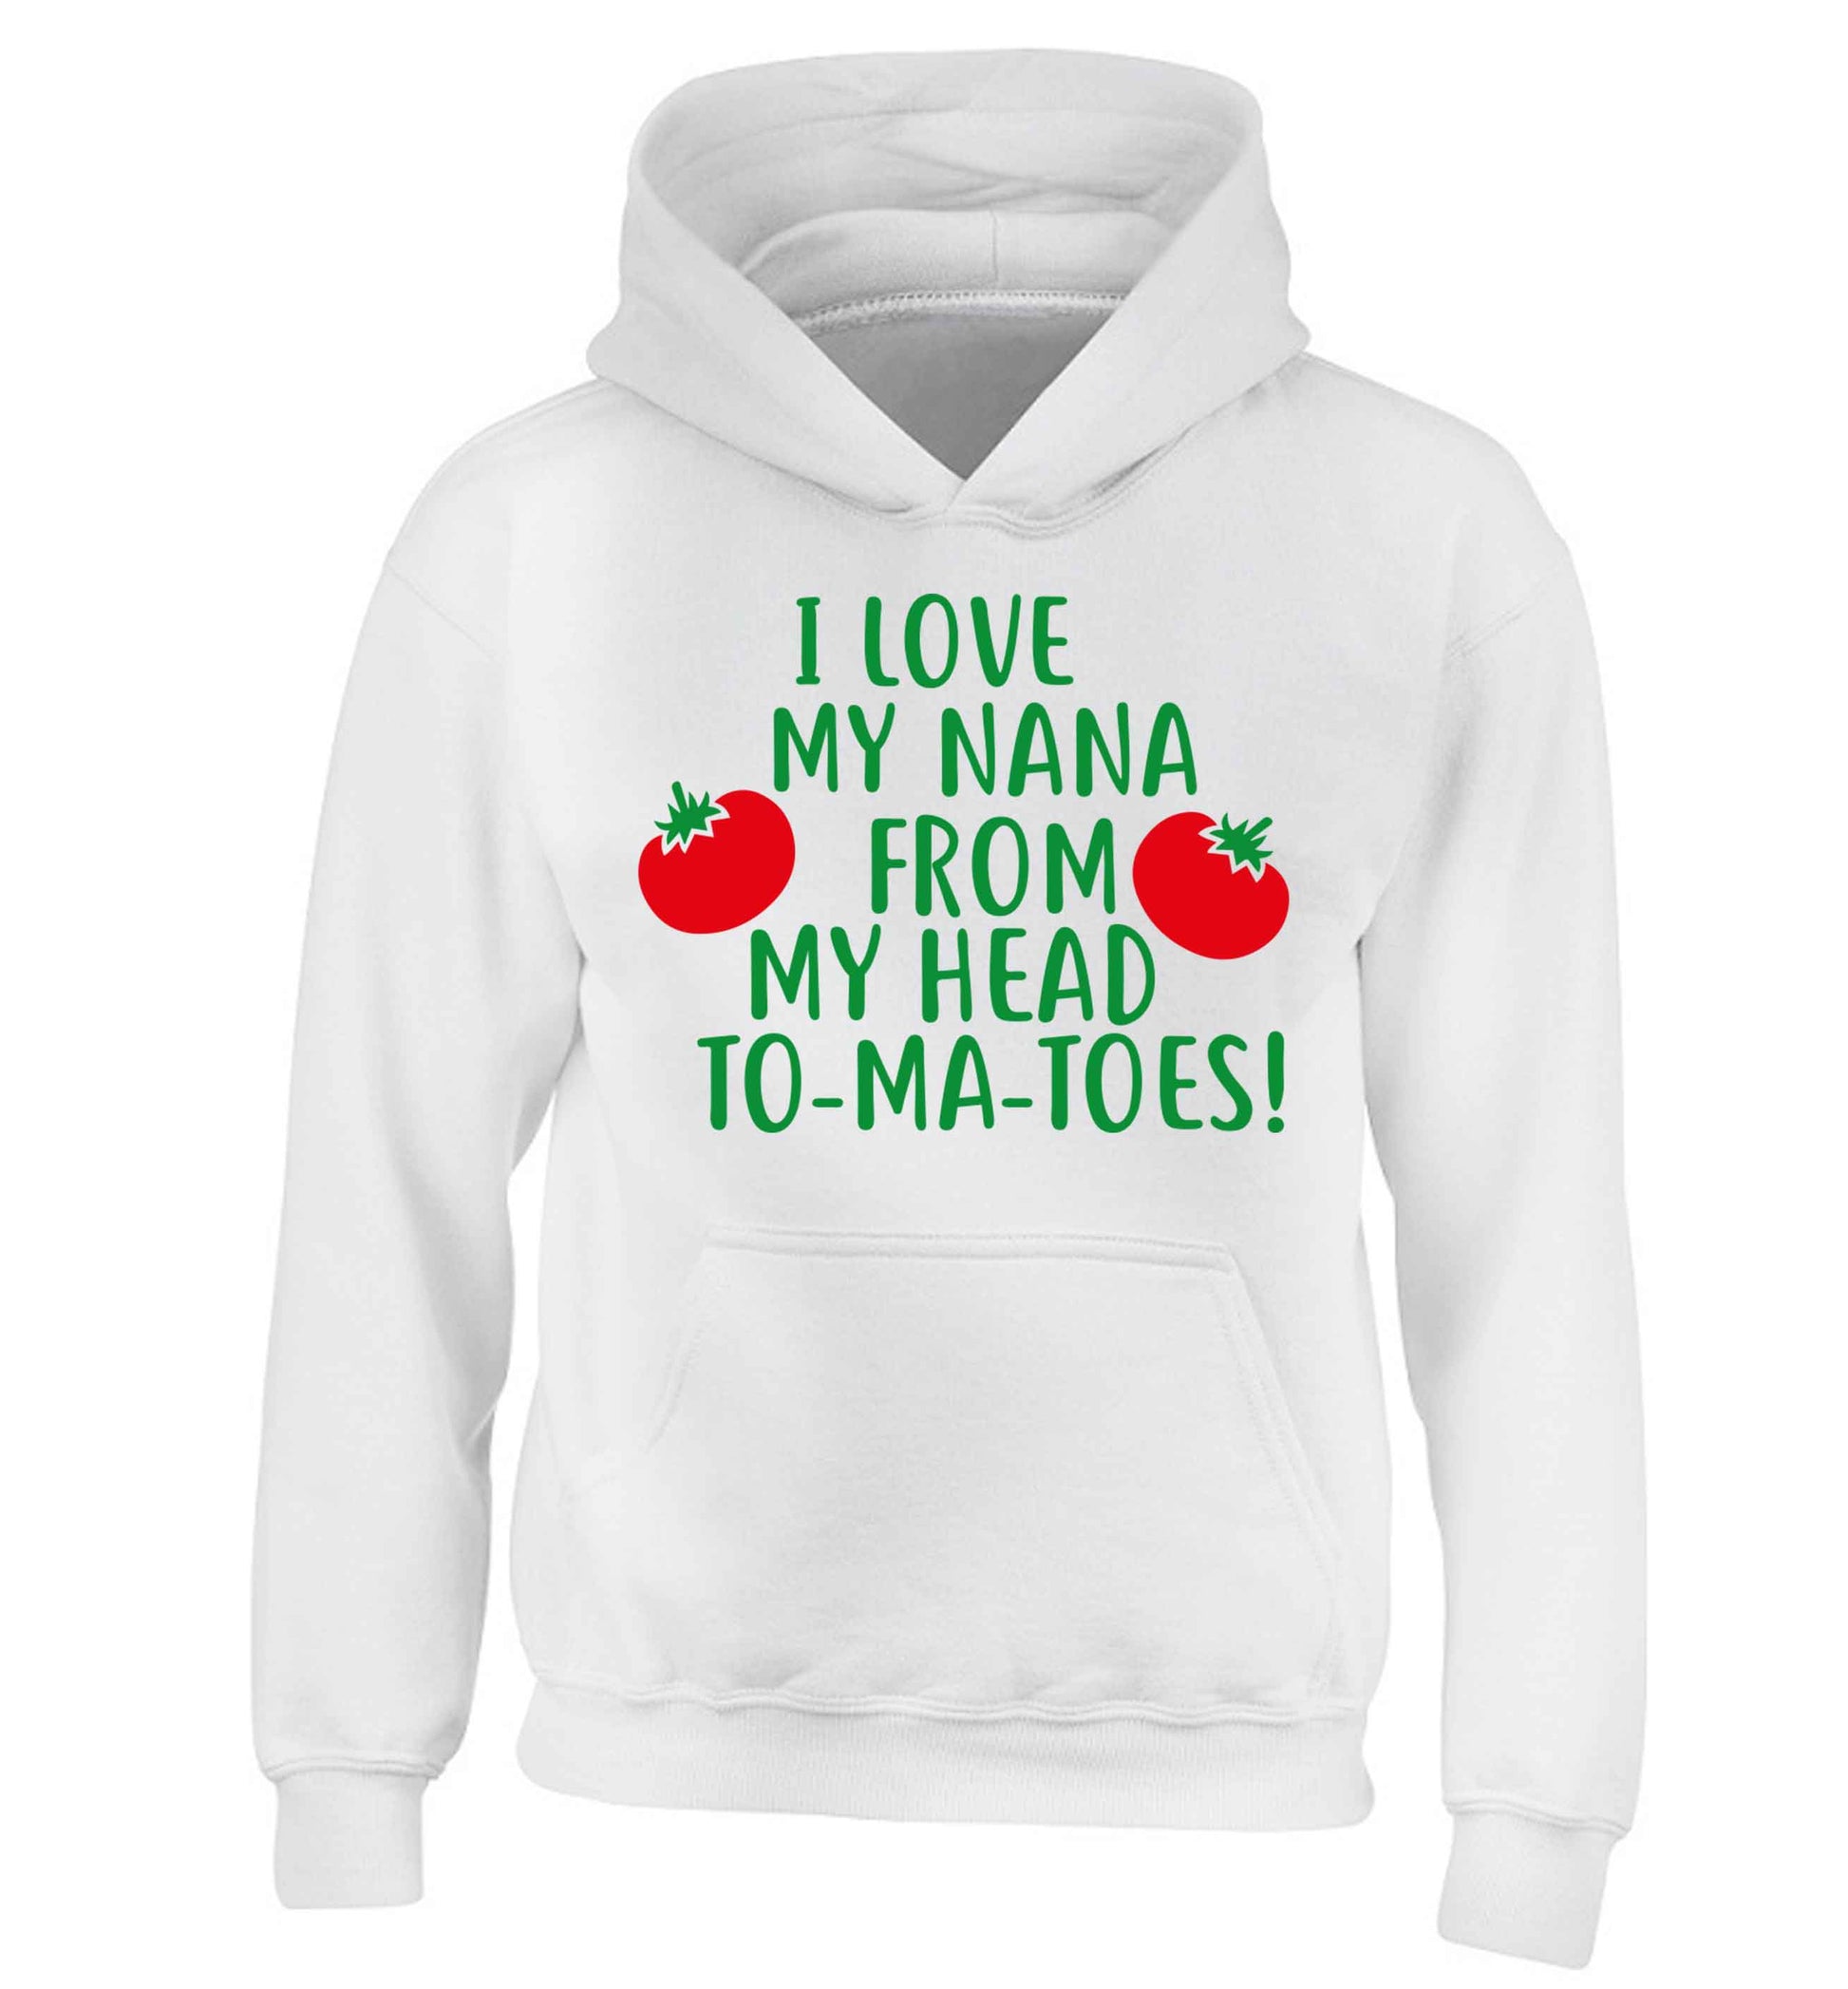 I love my nana from my head to-ma-toes children's white hoodie 12-13 Years